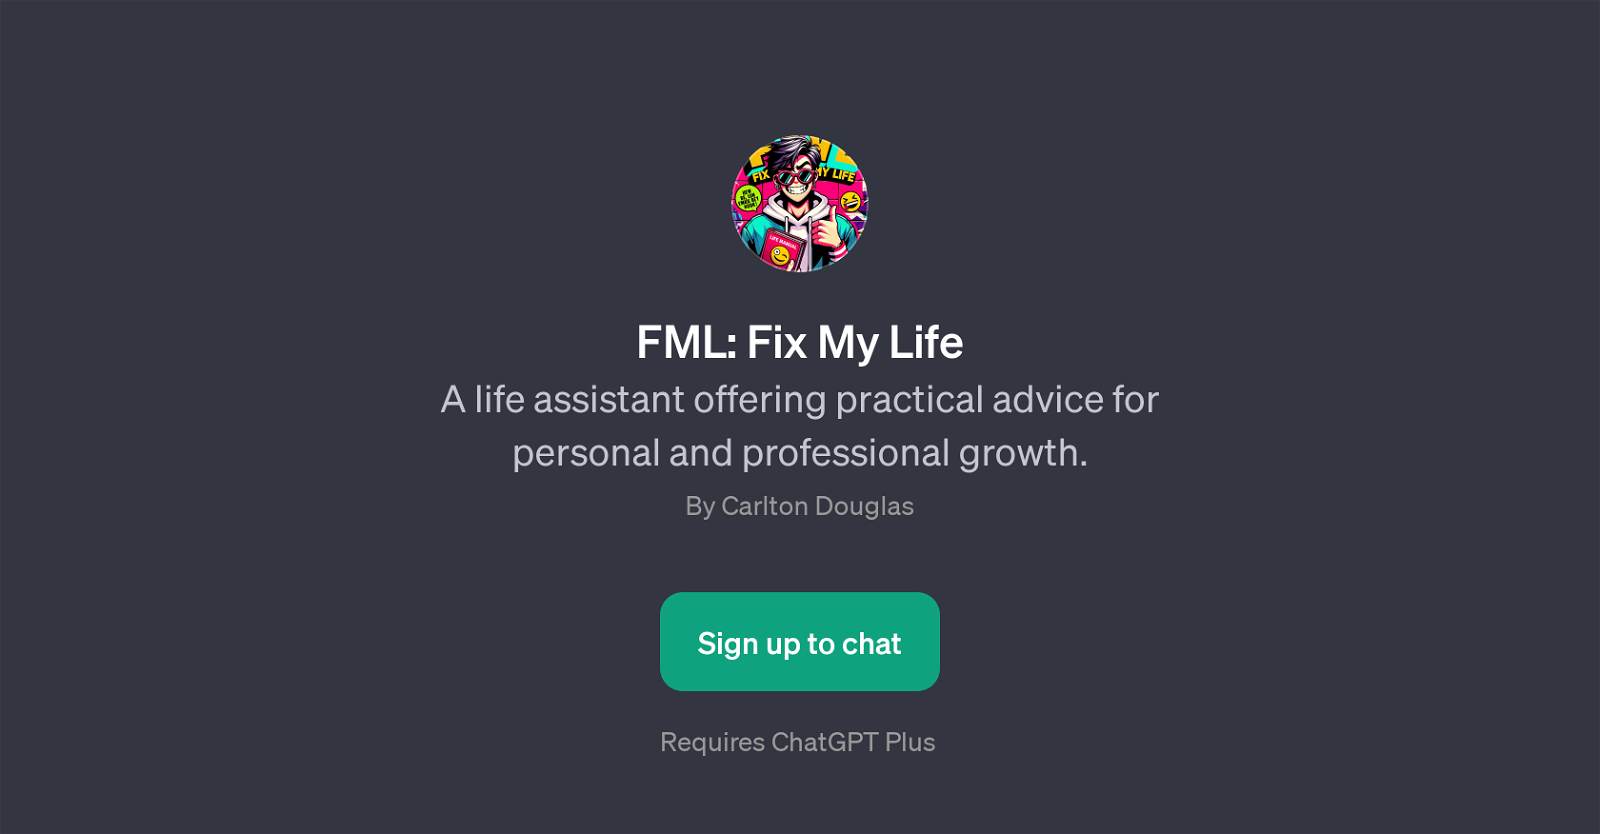 FML: Fix My Life website